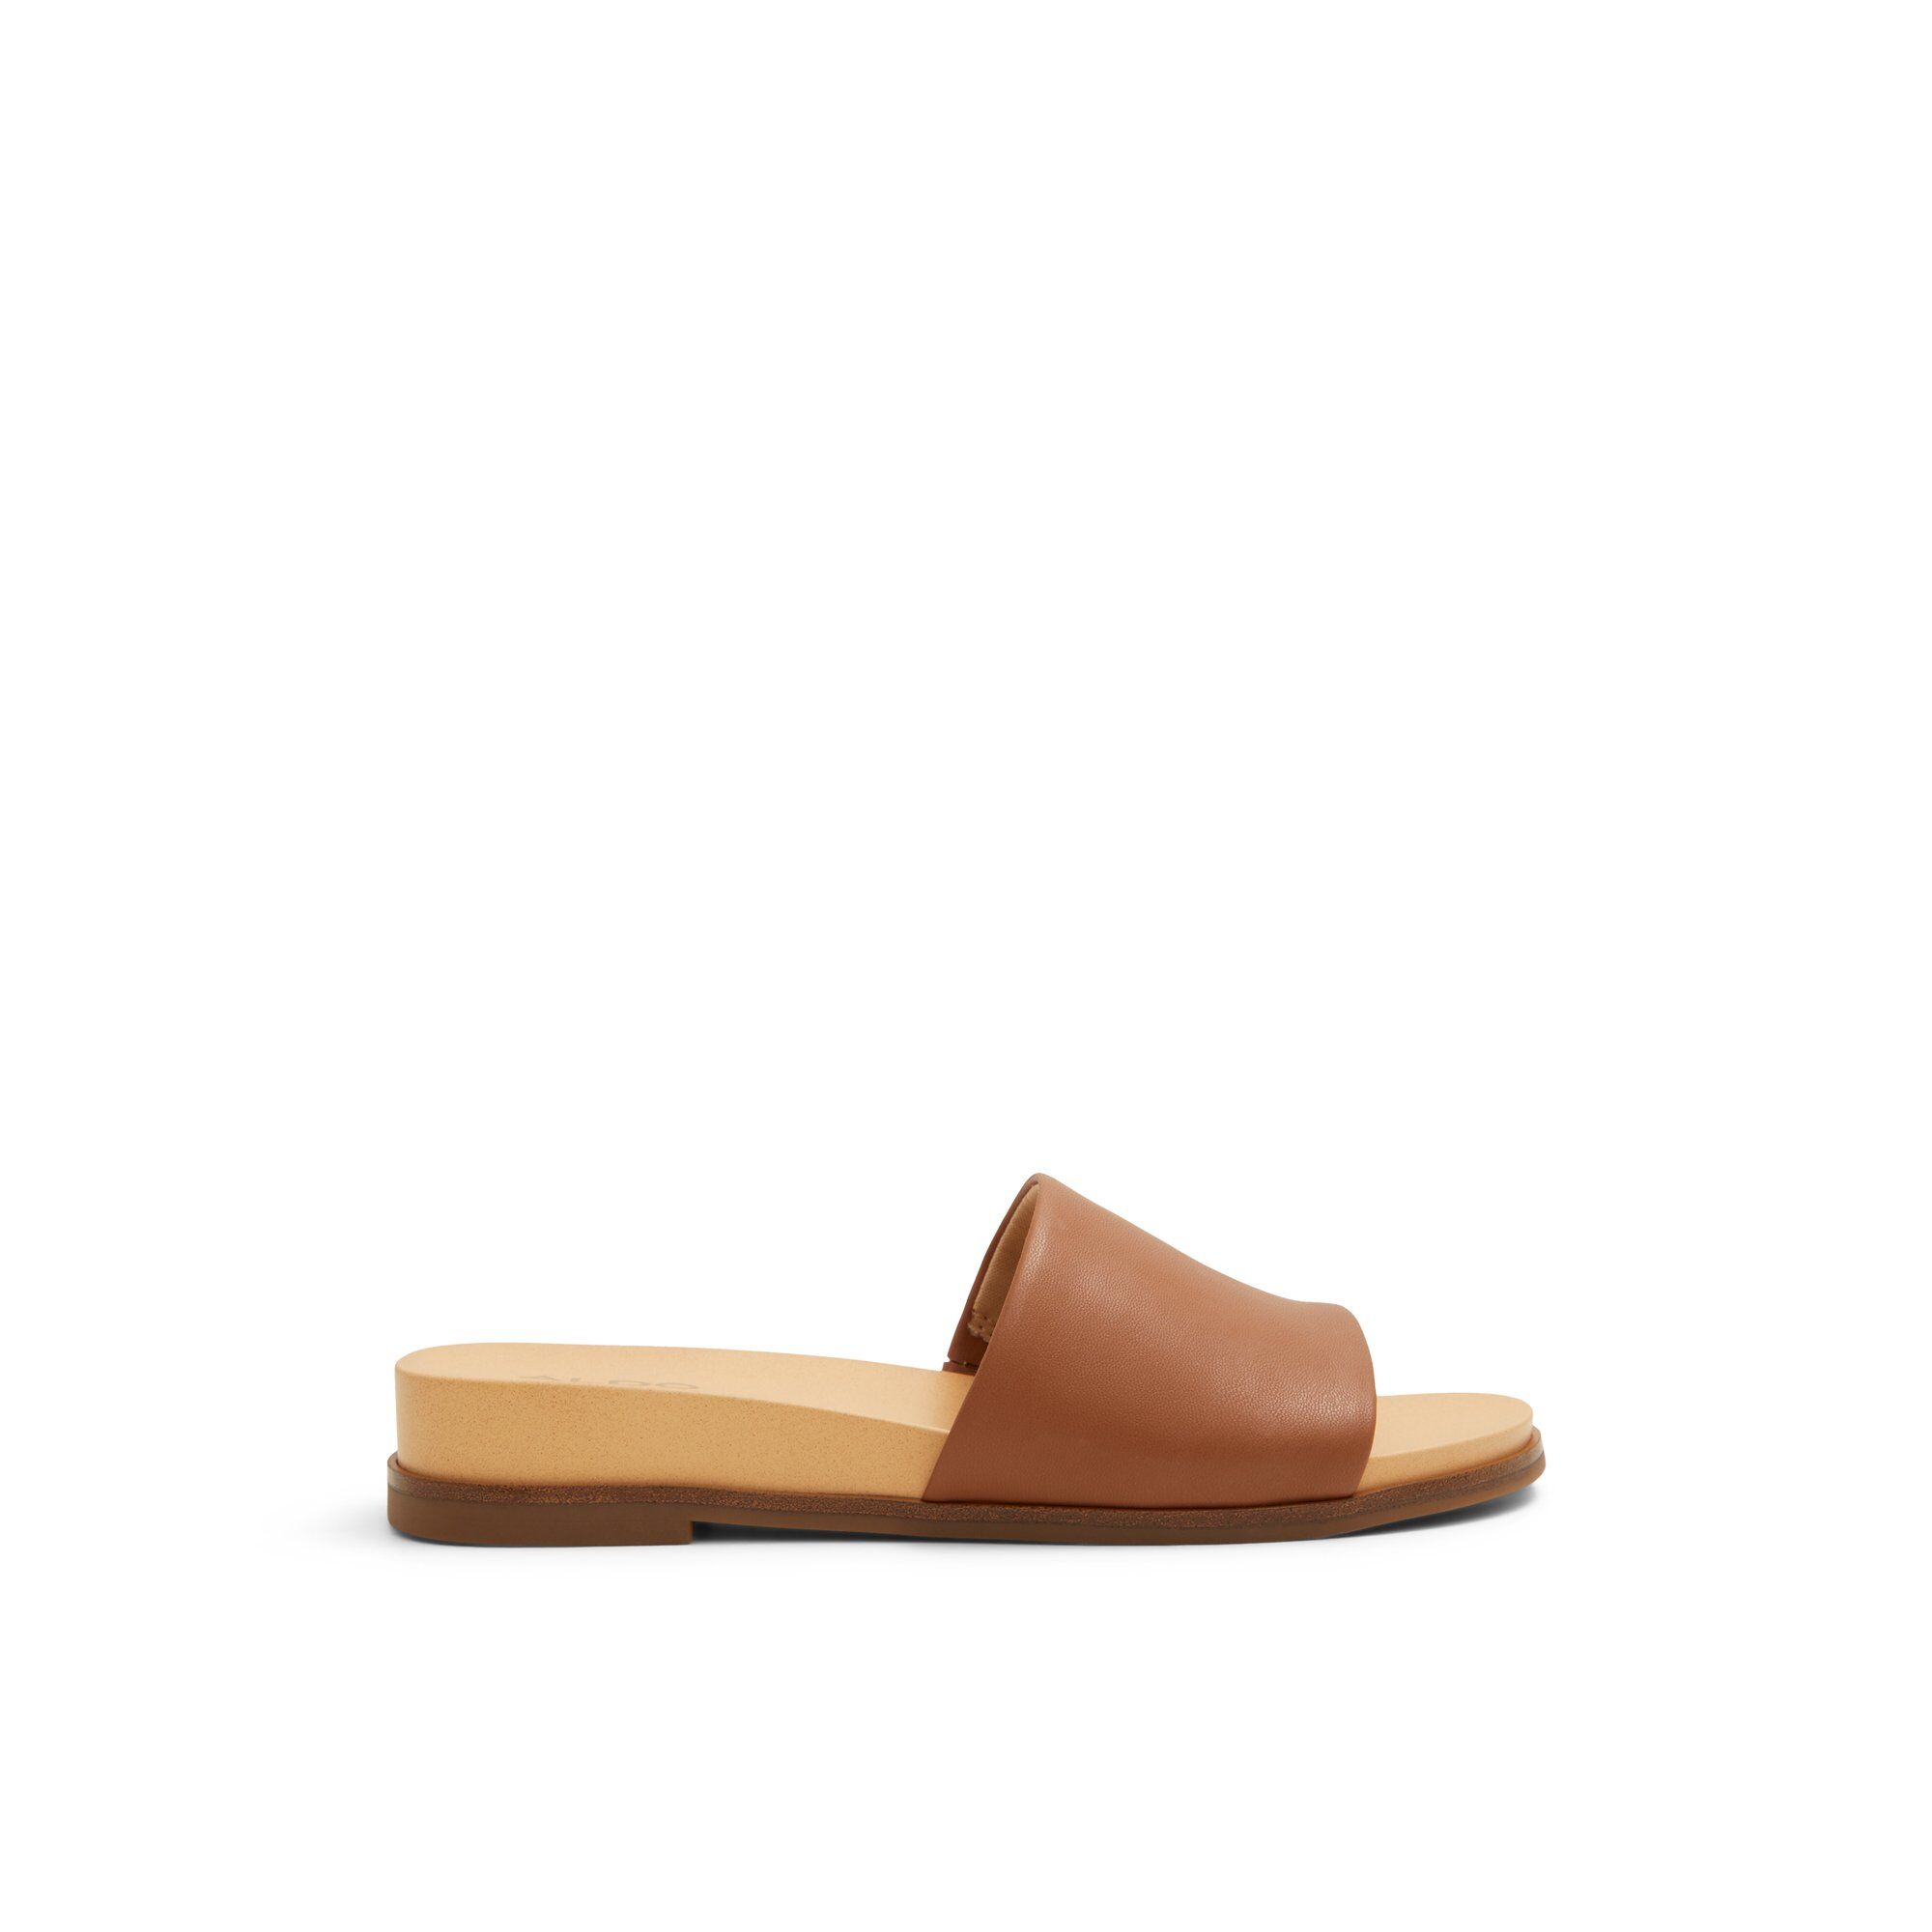 ALDO Elina - Women's Flat Sandals - Brown, Size 7